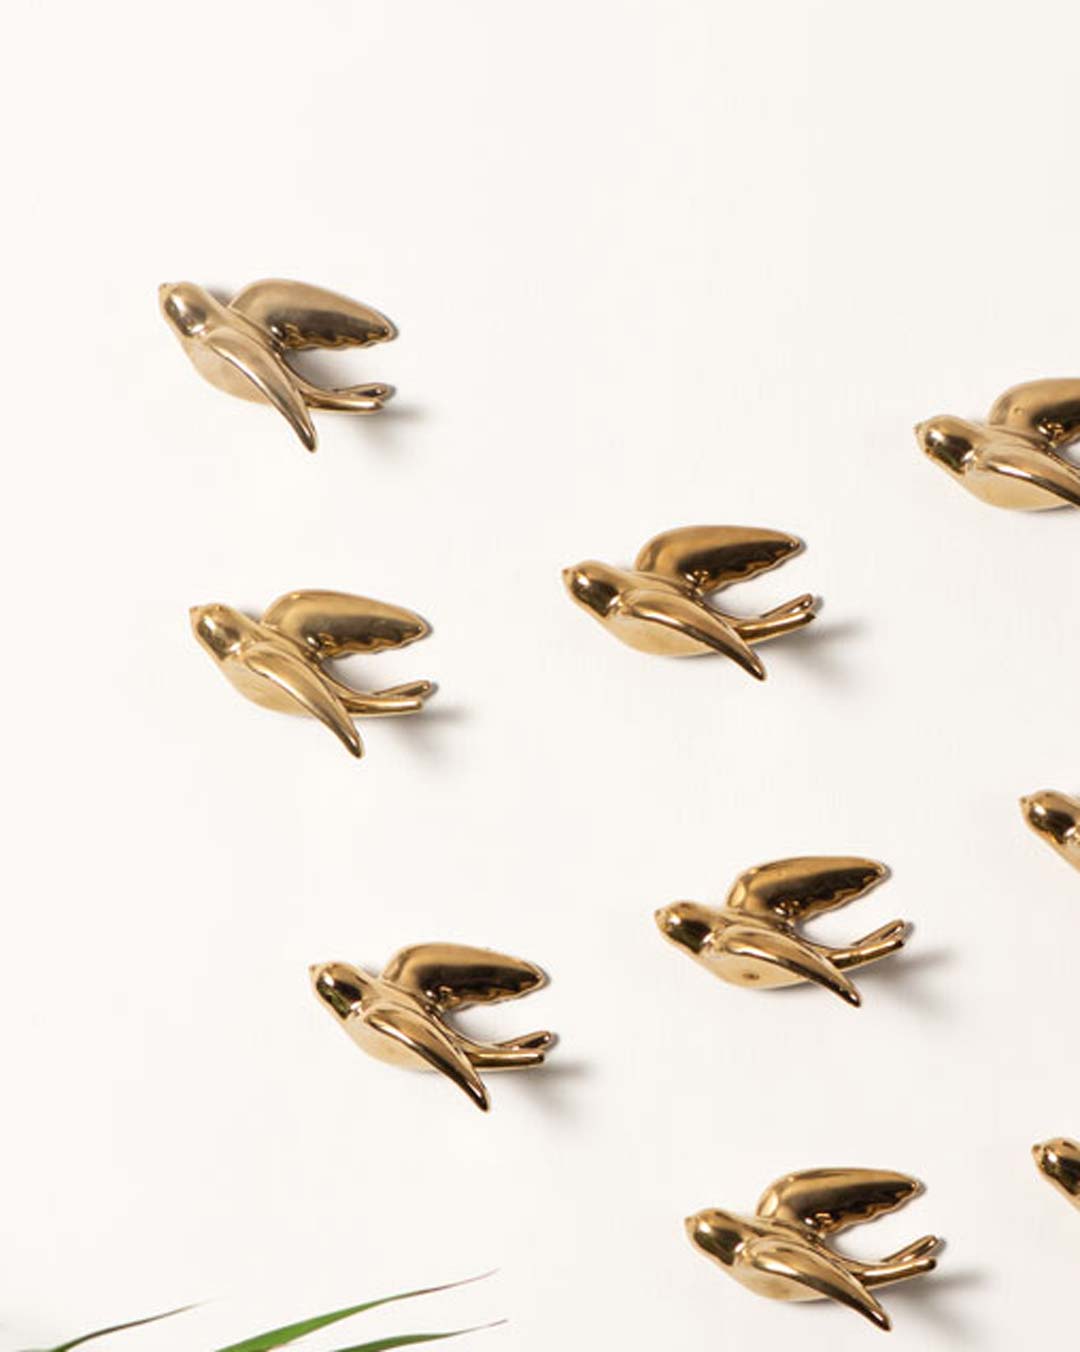 Nightingale Wall Mounted Ceramic Birds Gold Small - Set of 12